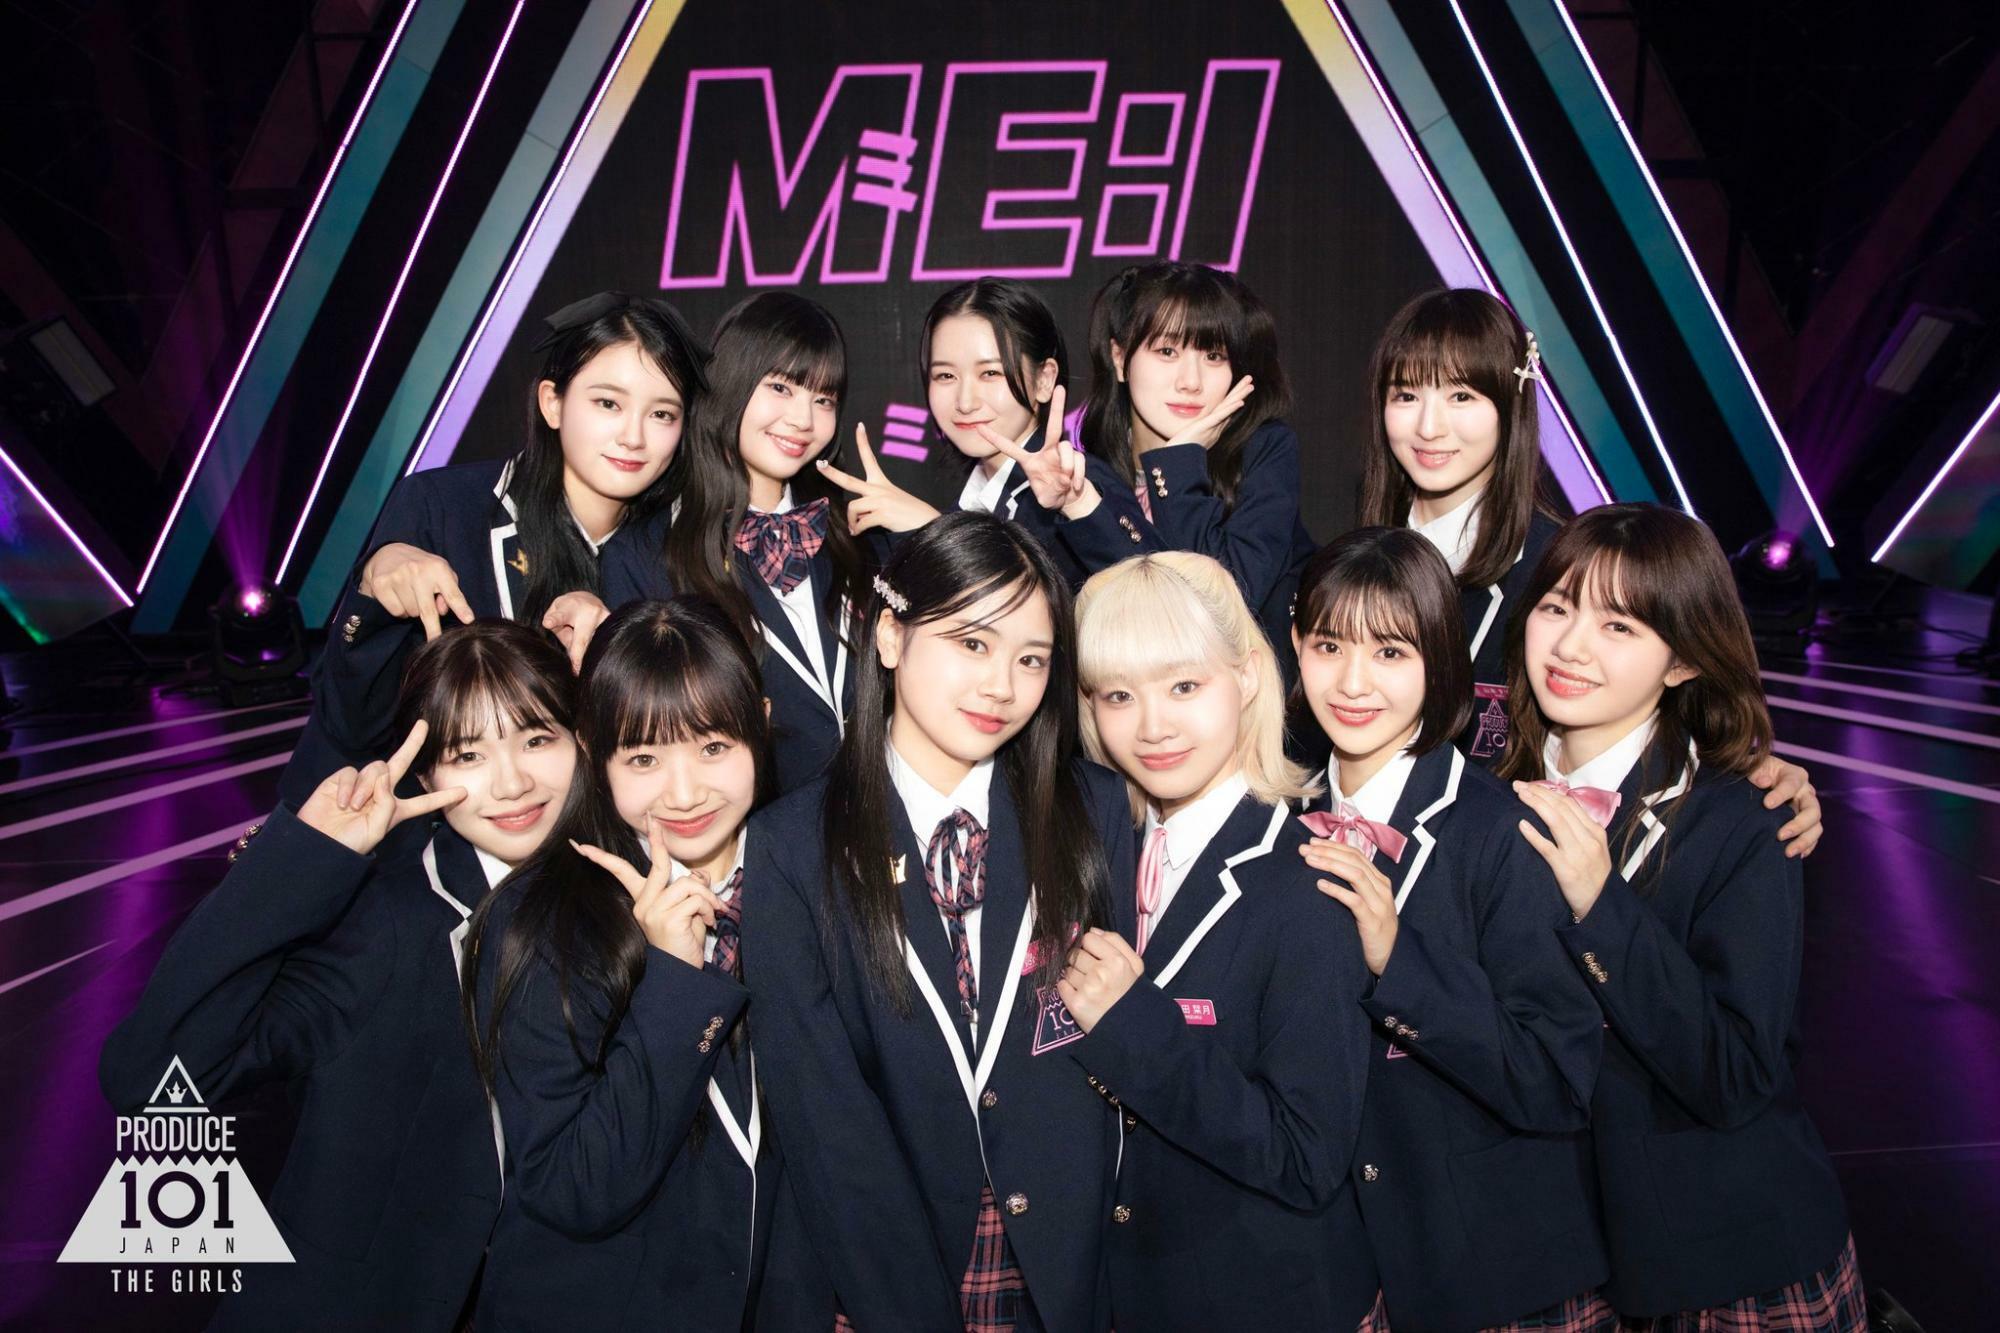 『PRODUCE 101 JAPAN THE GIRLS』公式Xアカウントより。上段中央が笠原桃奈、下段右から２人目が石井蘭、下段右が加藤心、上段右から２人目が実力派ヴォーカリスト・高見文寧。